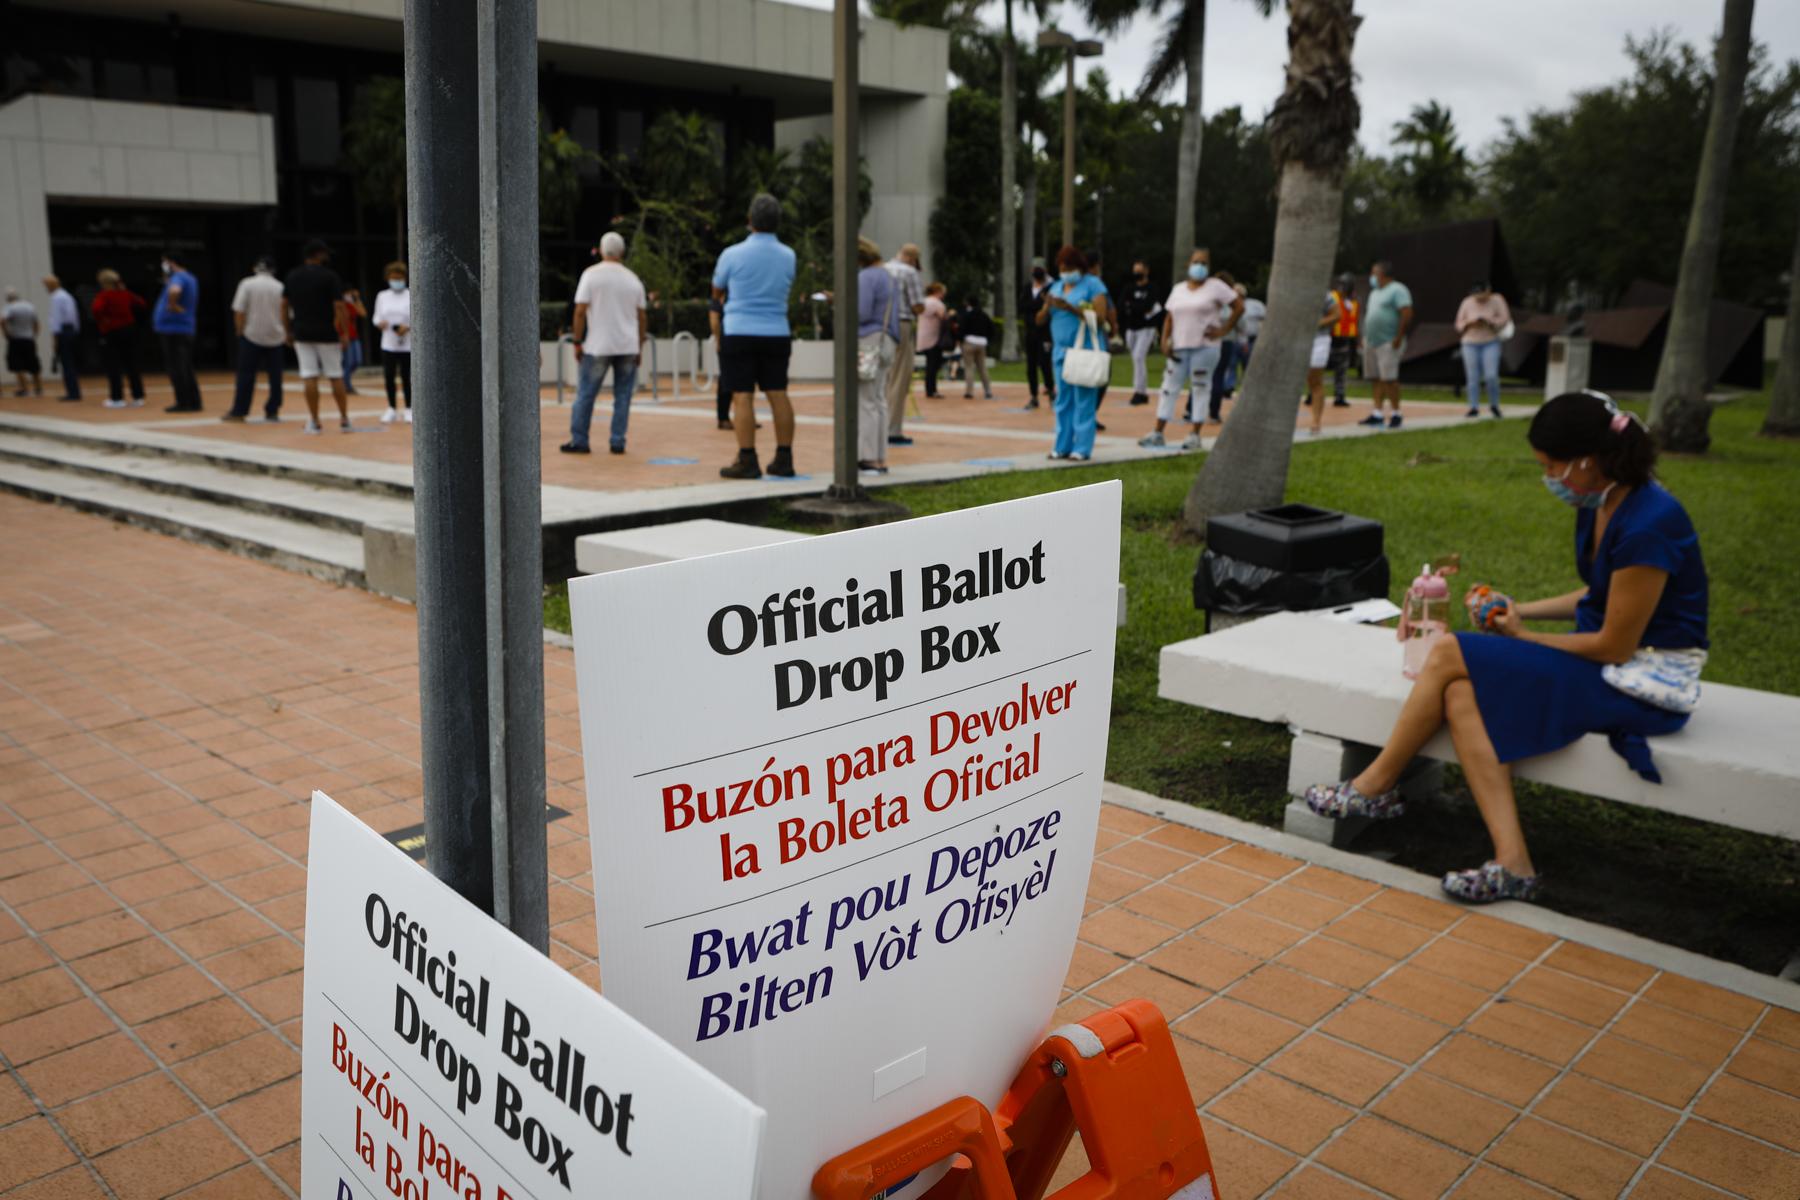 Election 2020 @ Miami, FL - "Offcial ballor drop box" signs are seen at...